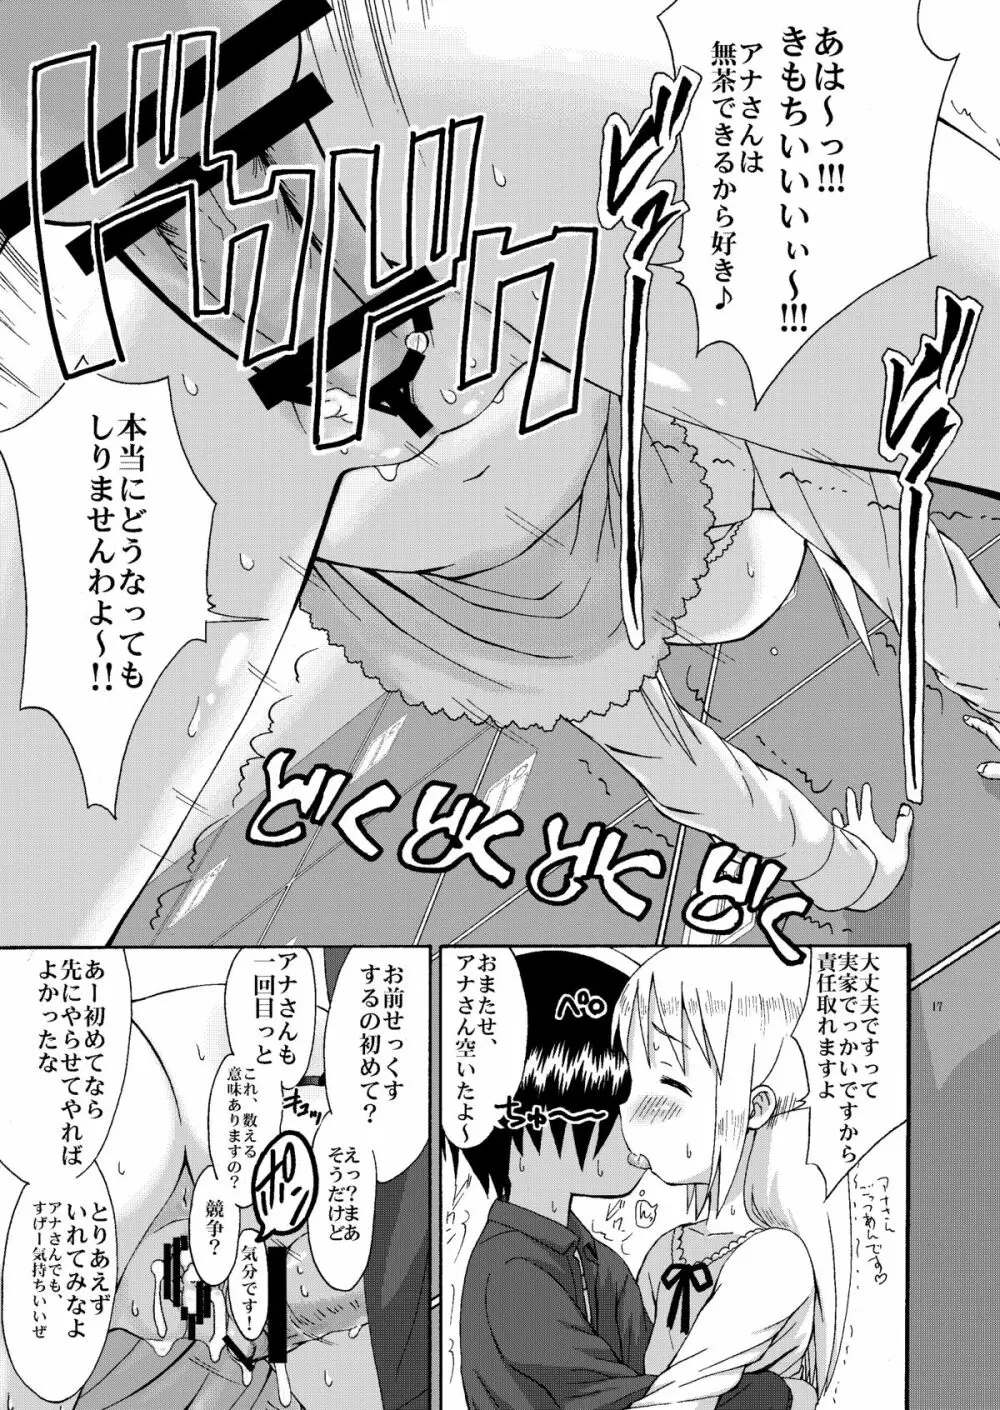 mashimaro ism extra - page17